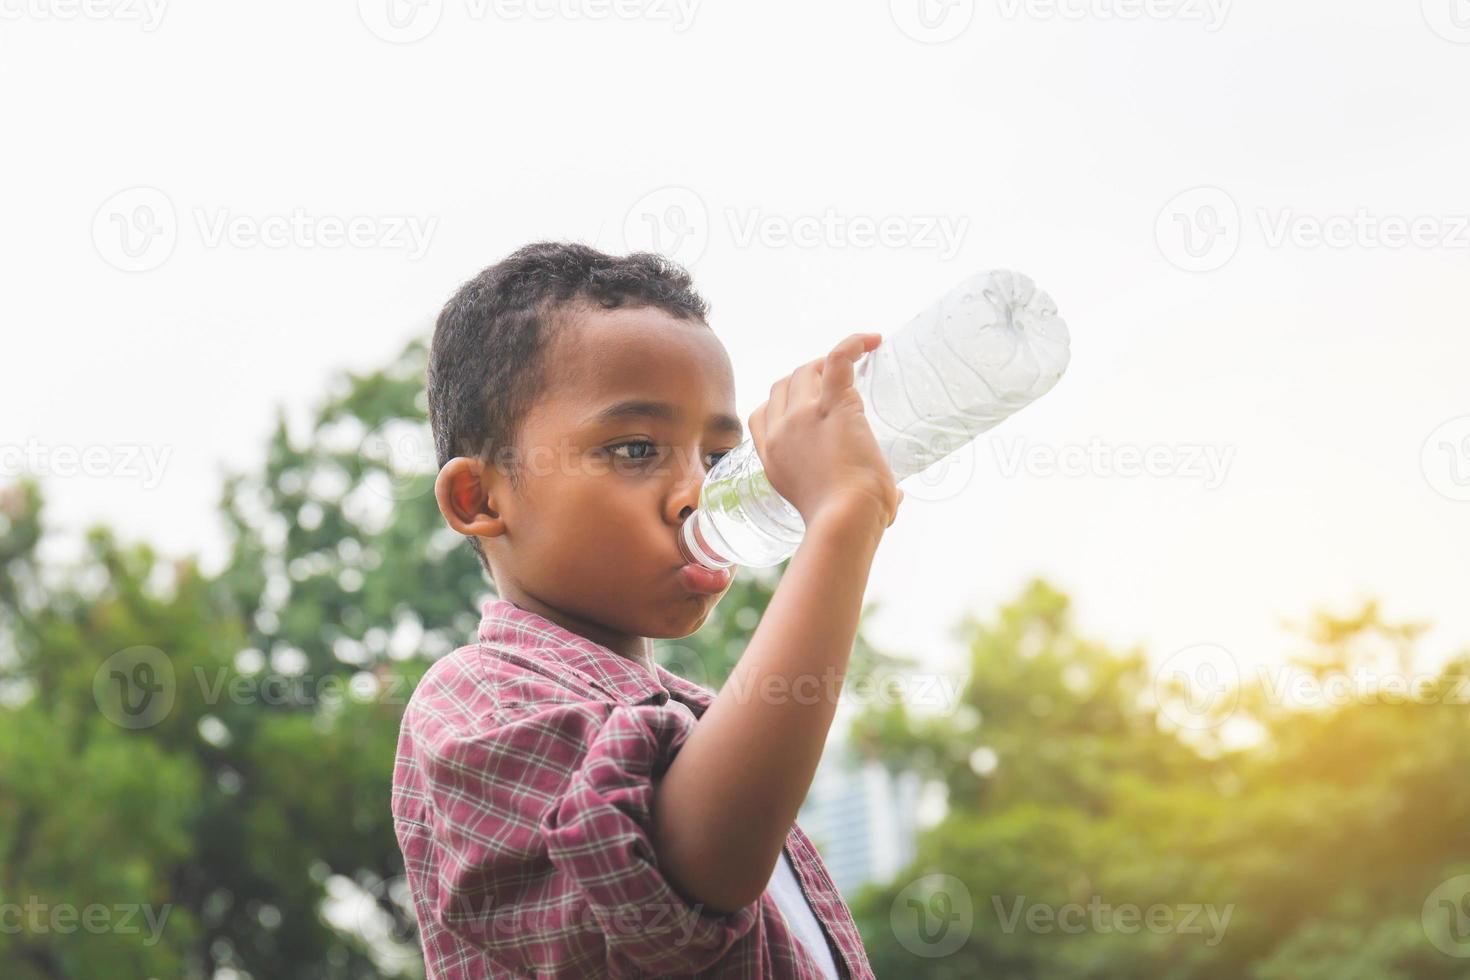 alegre menino afro-americano bebendo água depois de brincar no parque foto